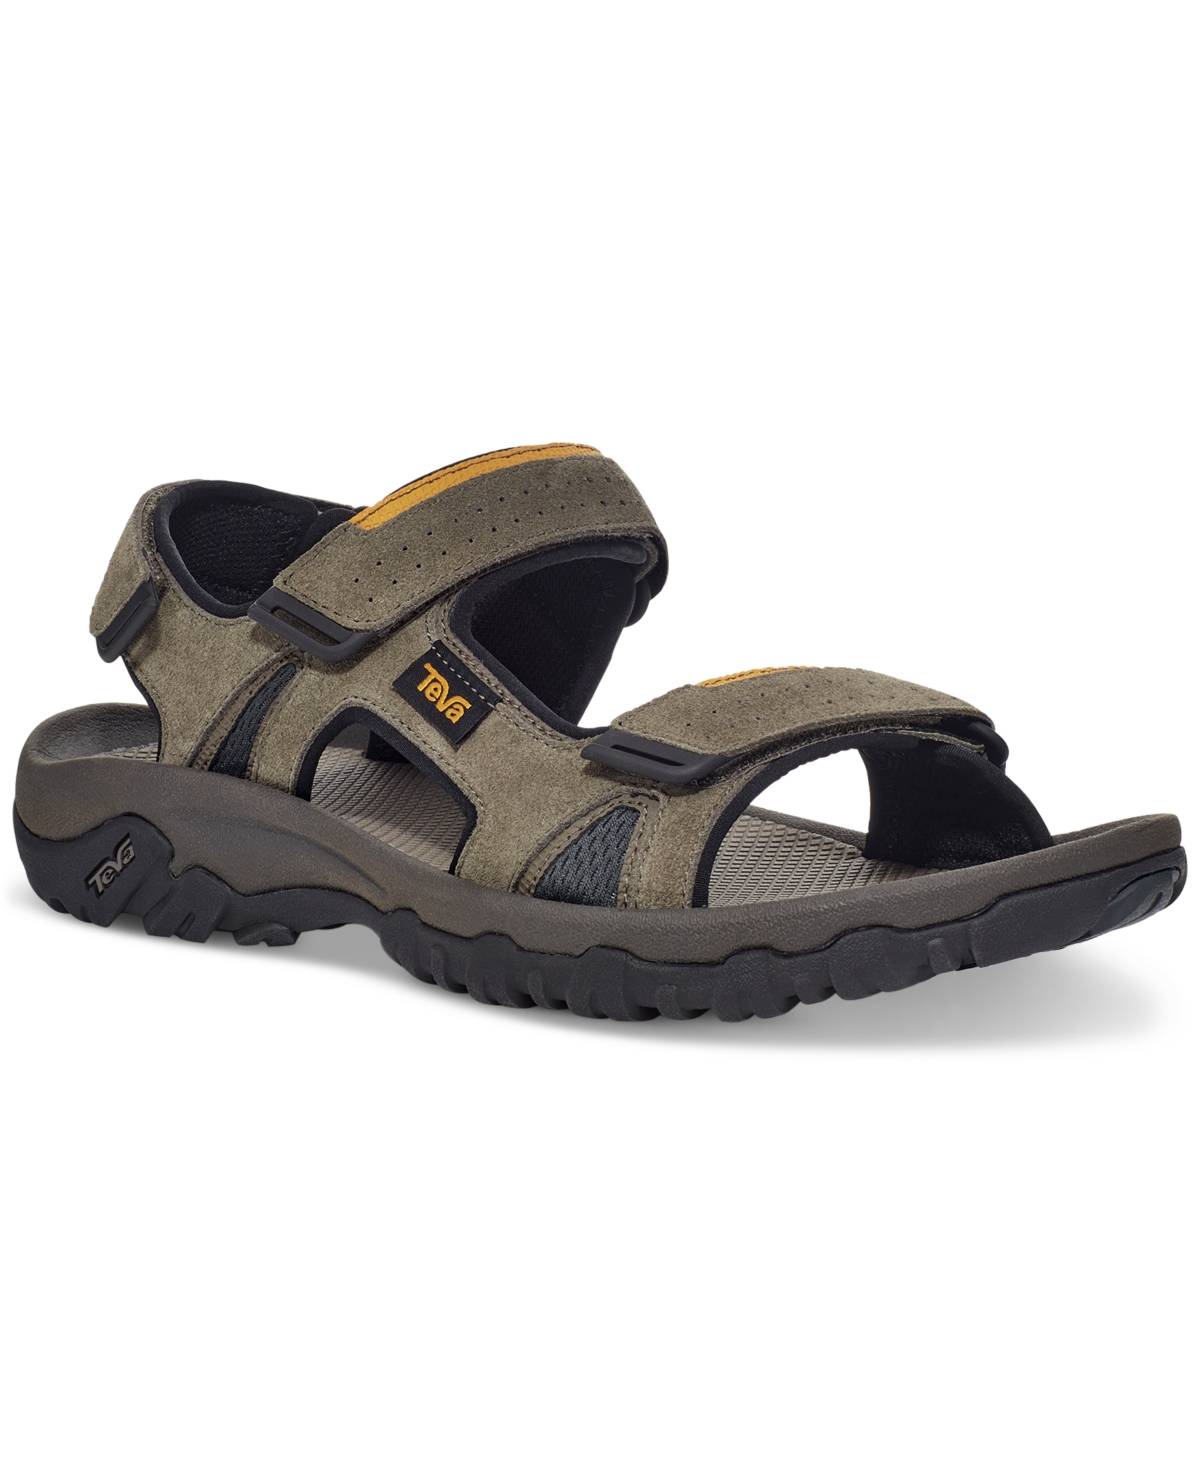 Men's Katavi 2 Water-Resistant Slide Sandals - Bungee Cord